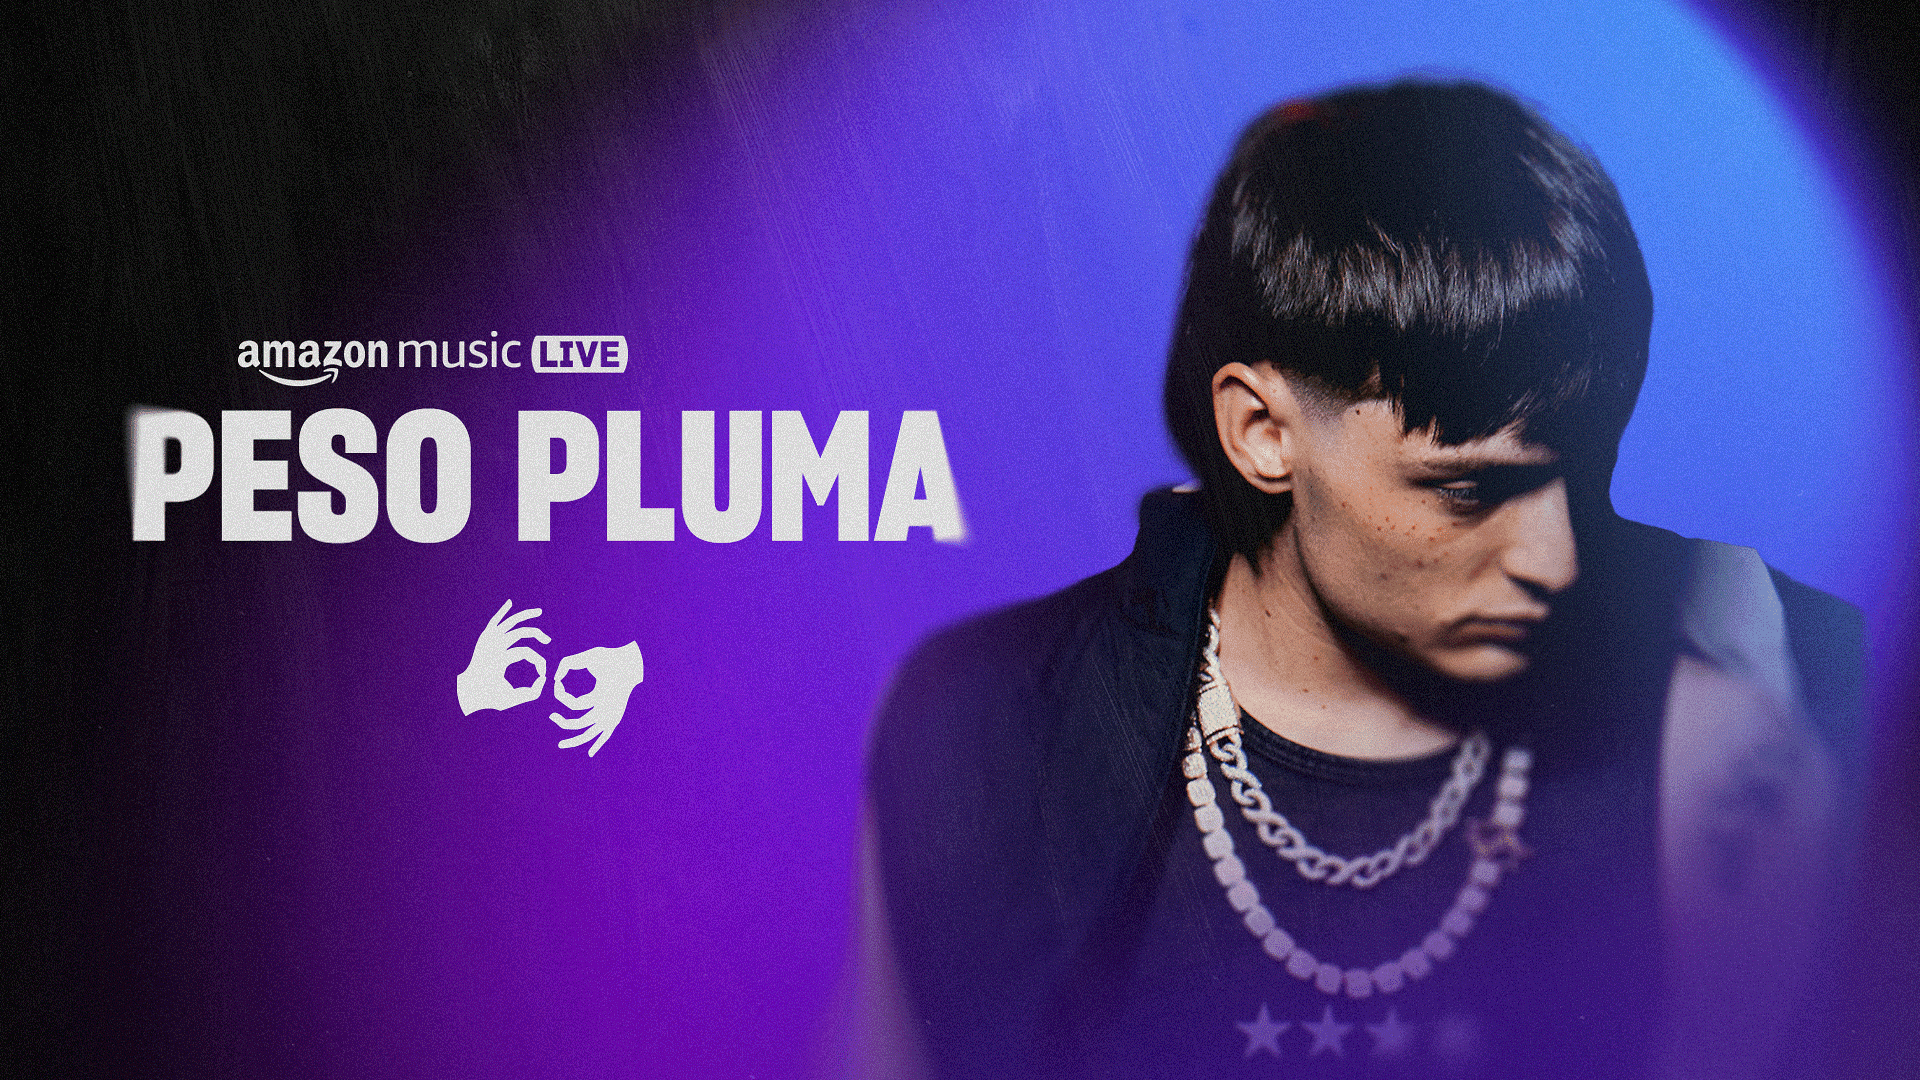 [ASL Version] Amazon Music Live with Peso Pluma